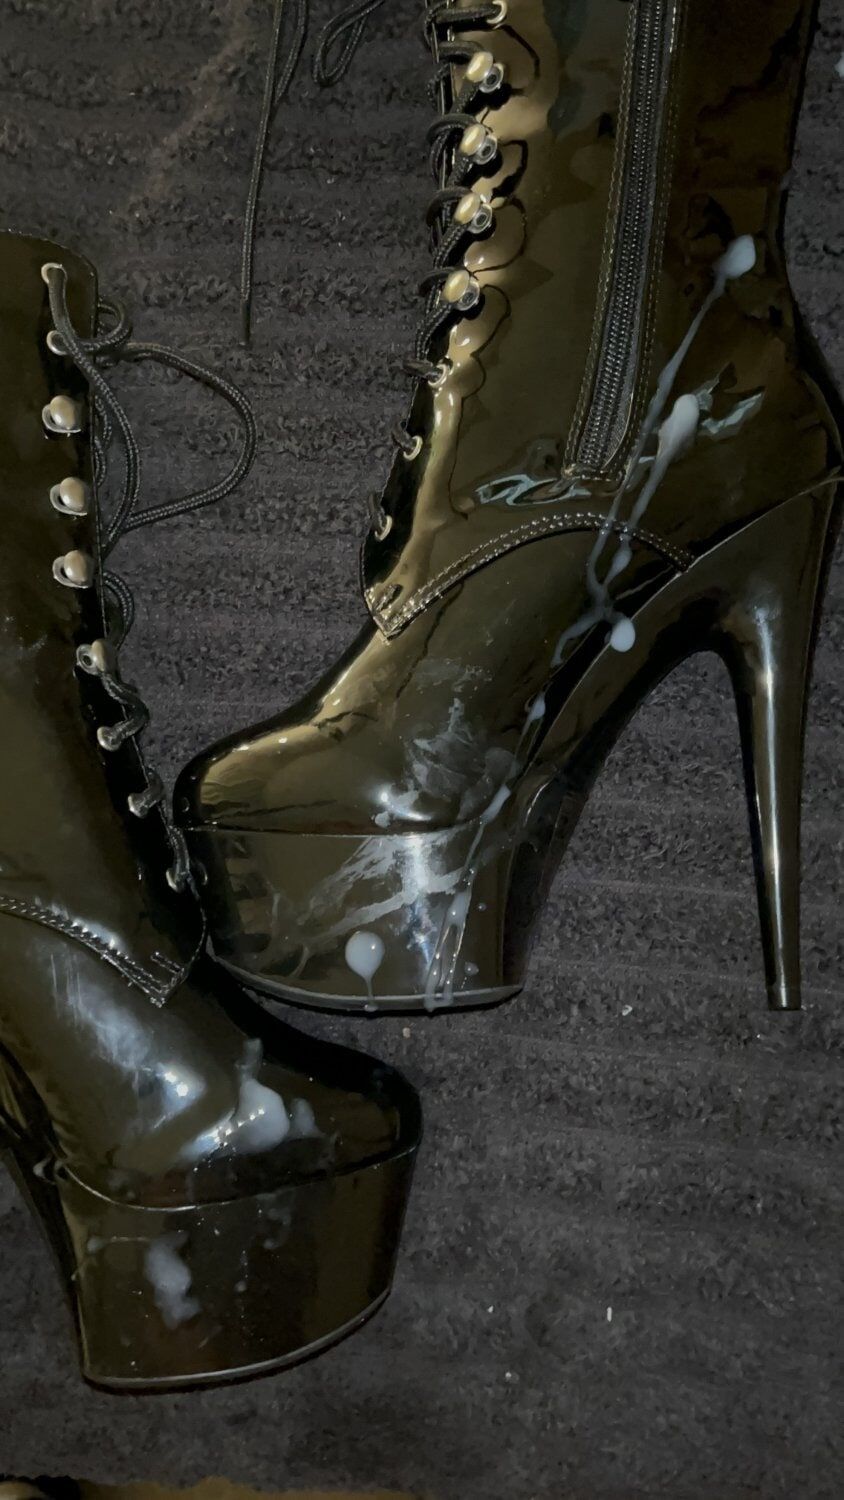 Cum on Leather Platform Boots